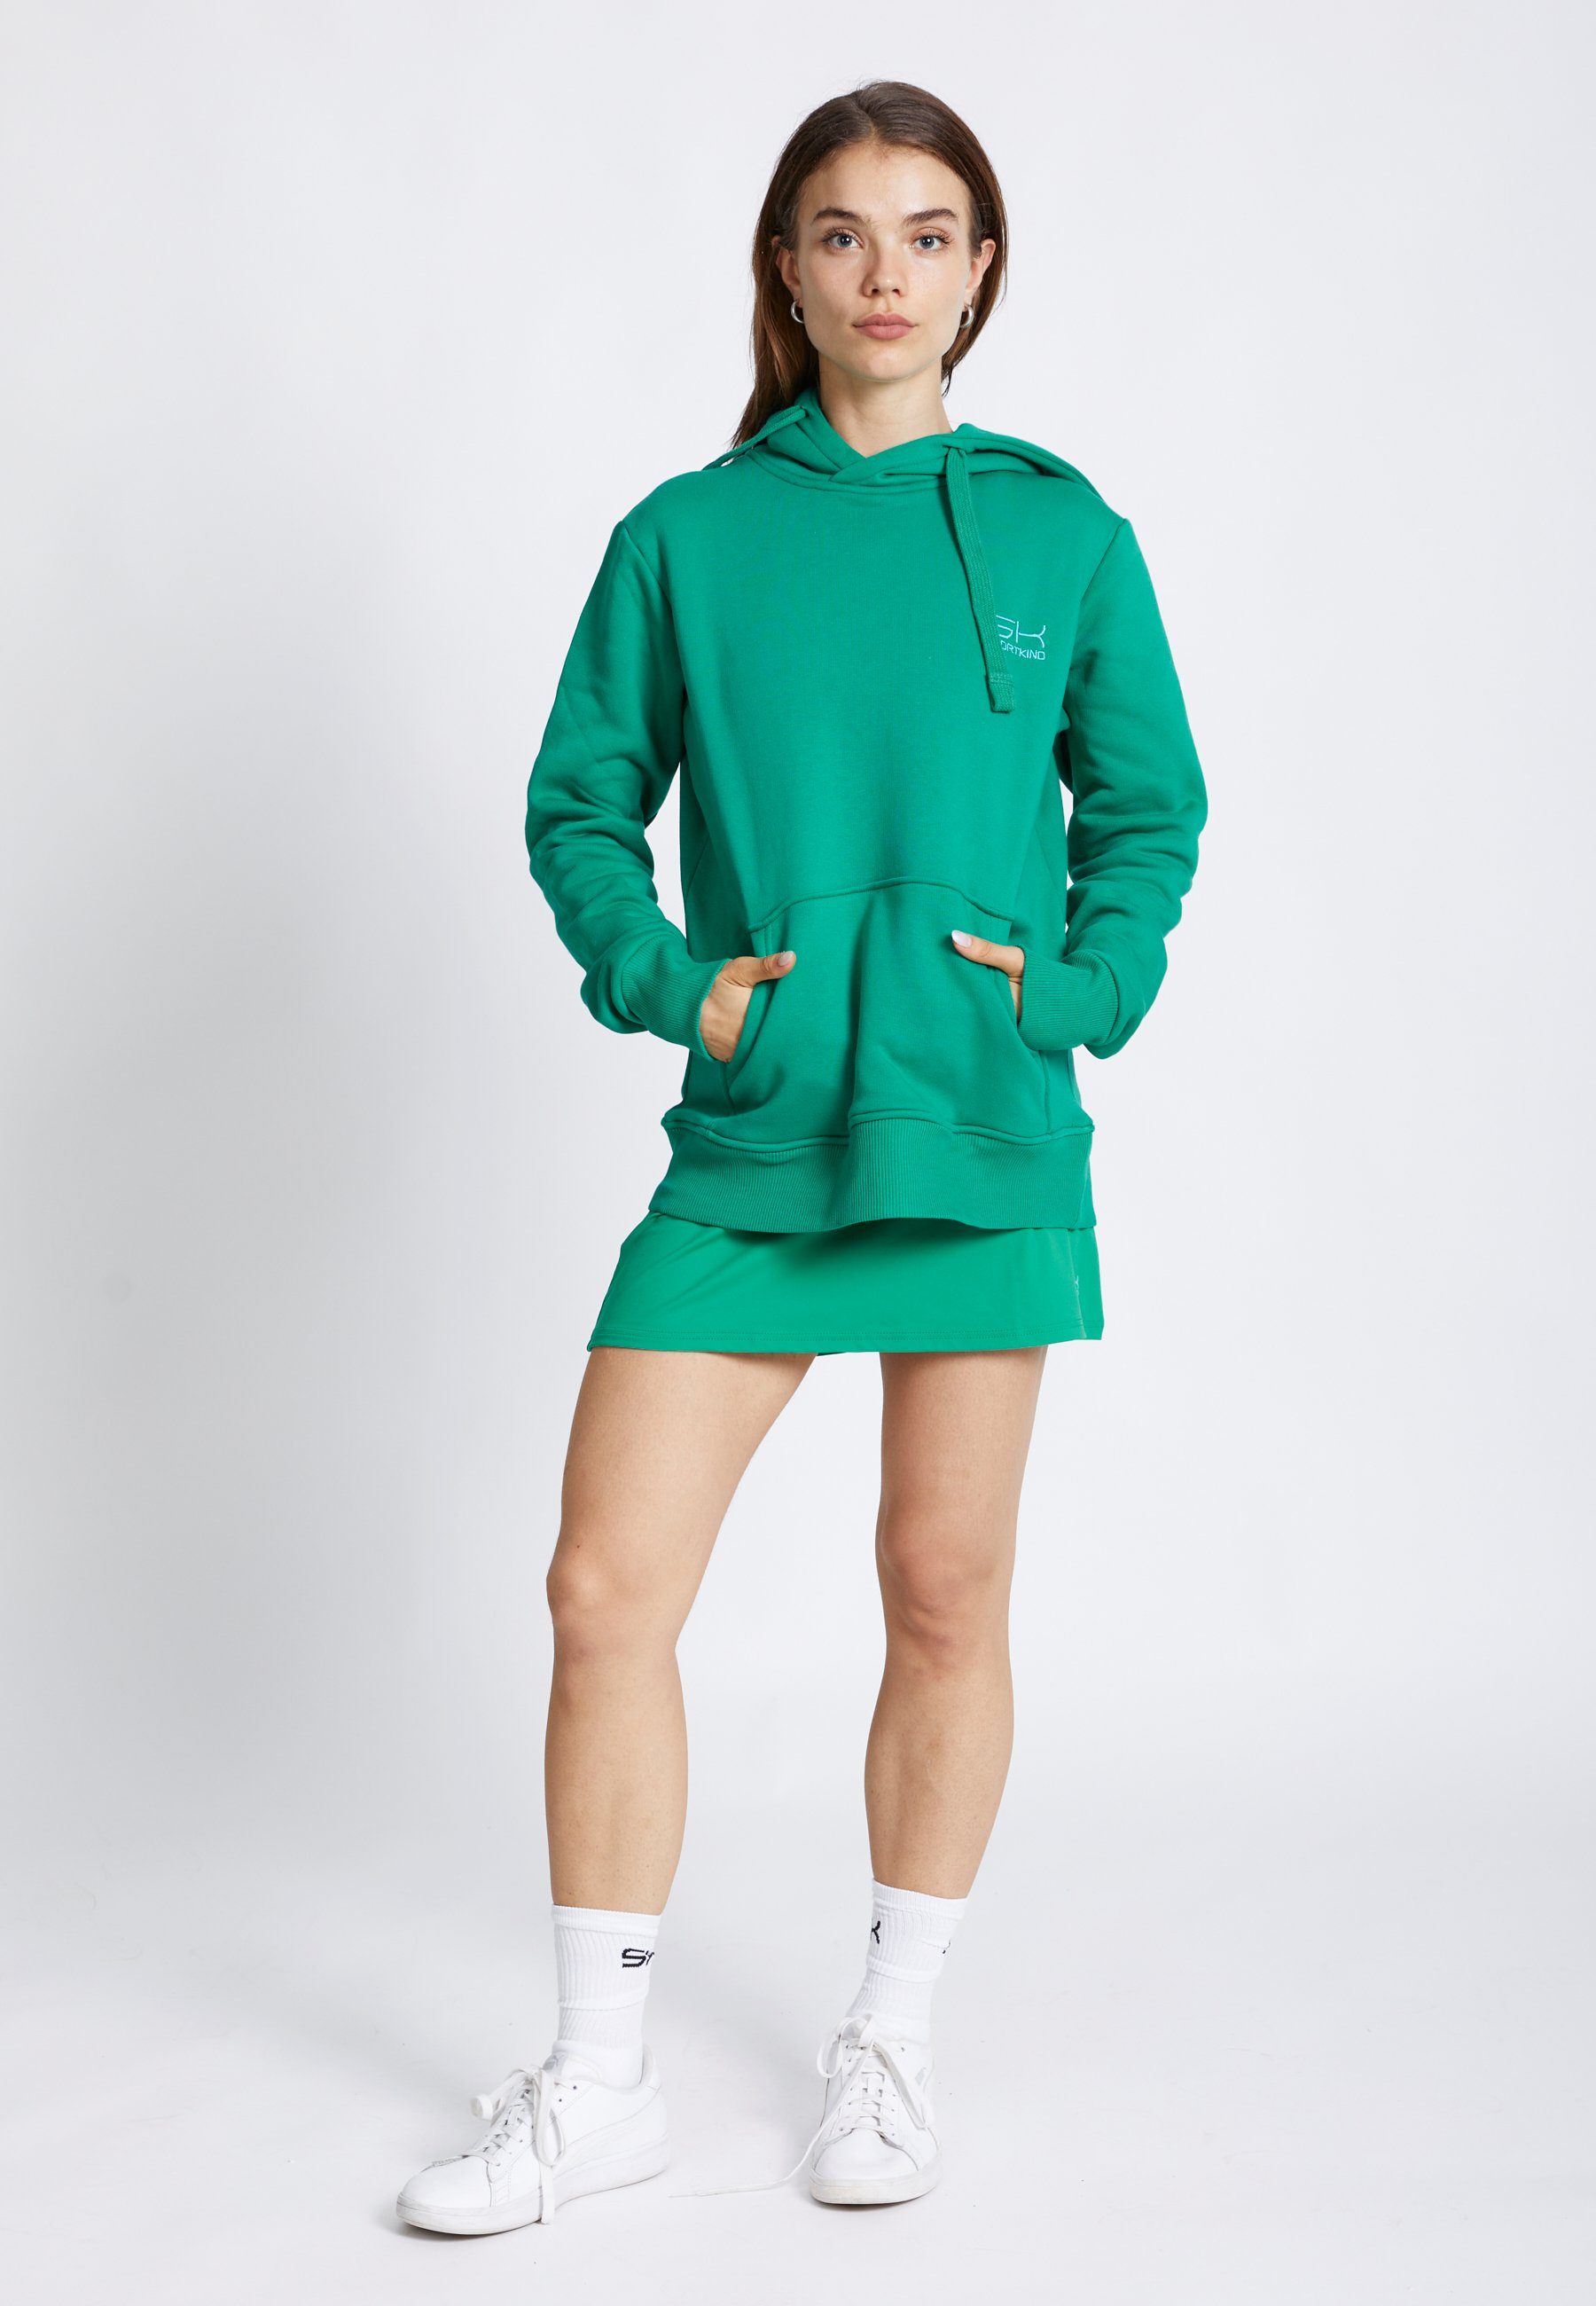 SPORTKIND Hoodie unisex smaragd grün Kapuzensweater